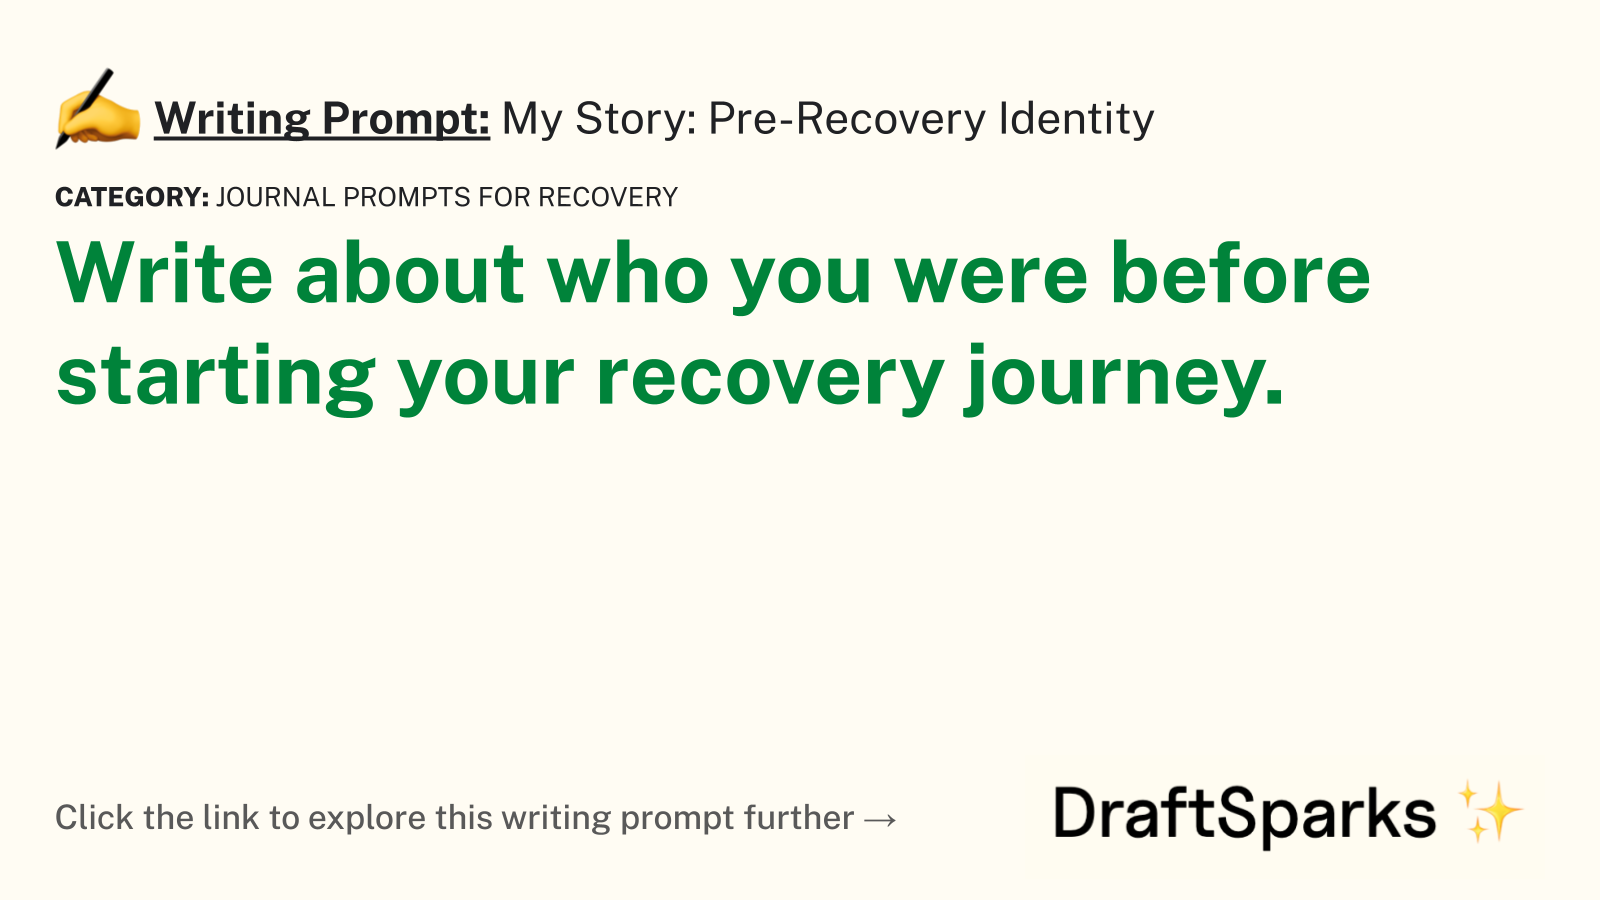 My Story: Pre-Recovery Identity